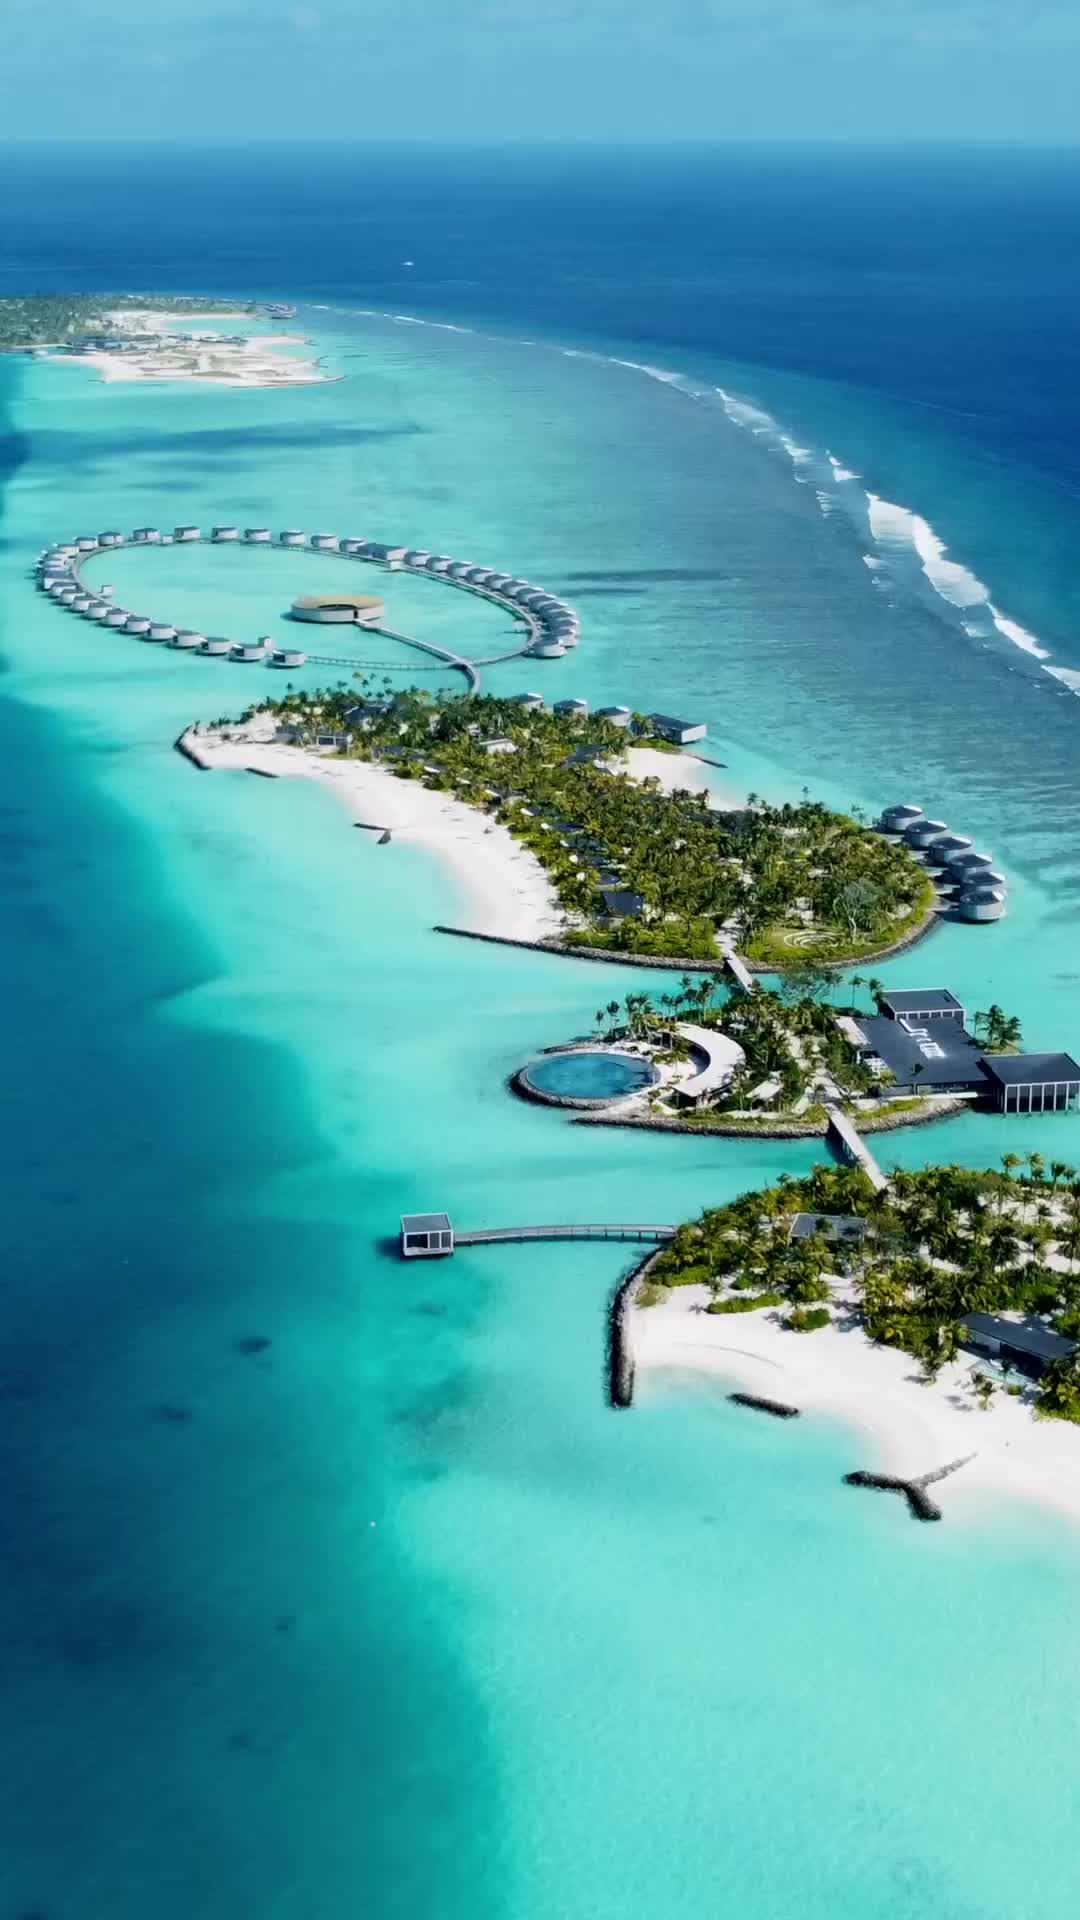 Dream Travel: The Ritz-Carlton Maldives Paradise